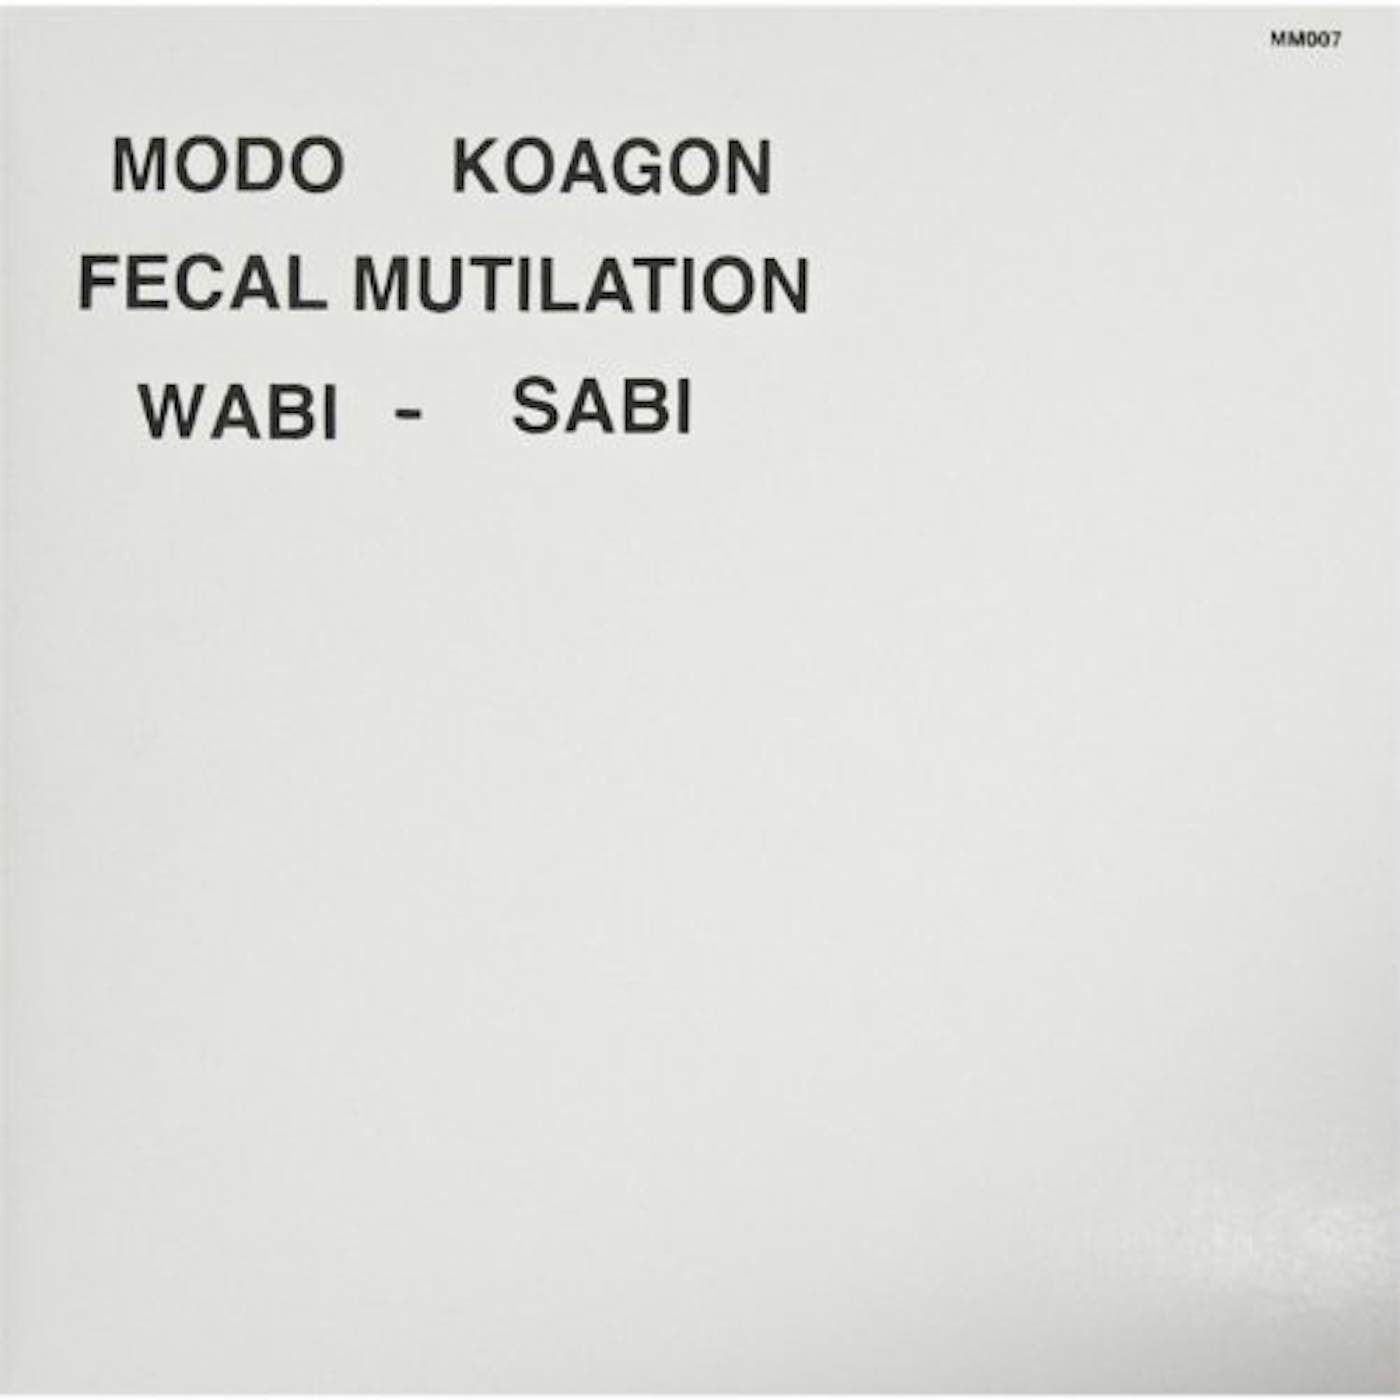 Modo Koagon Wabi-Sabi Vinyl Record